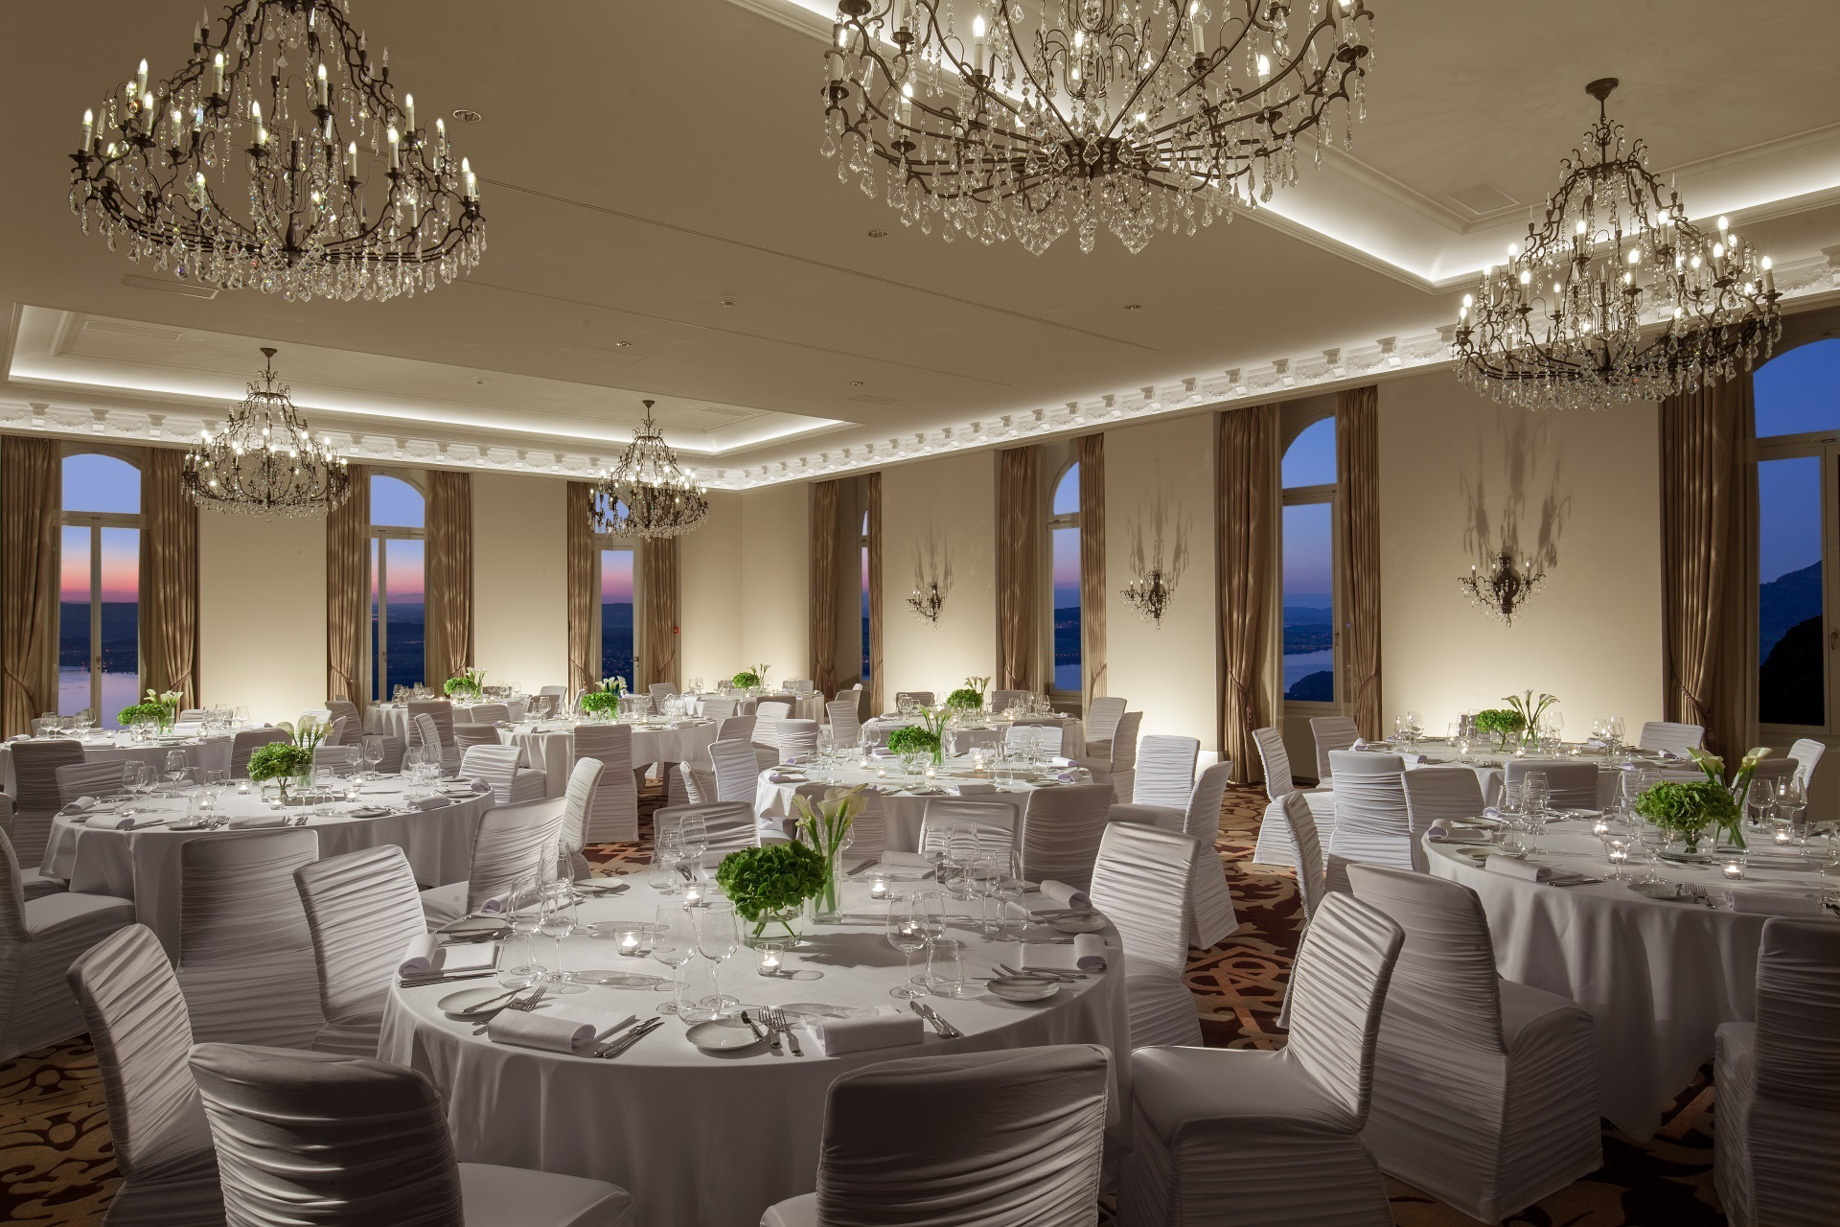 Burgenstock Hotel & Alpine Spa - Obburgen, Switzerland - Conference Room Dining Setup